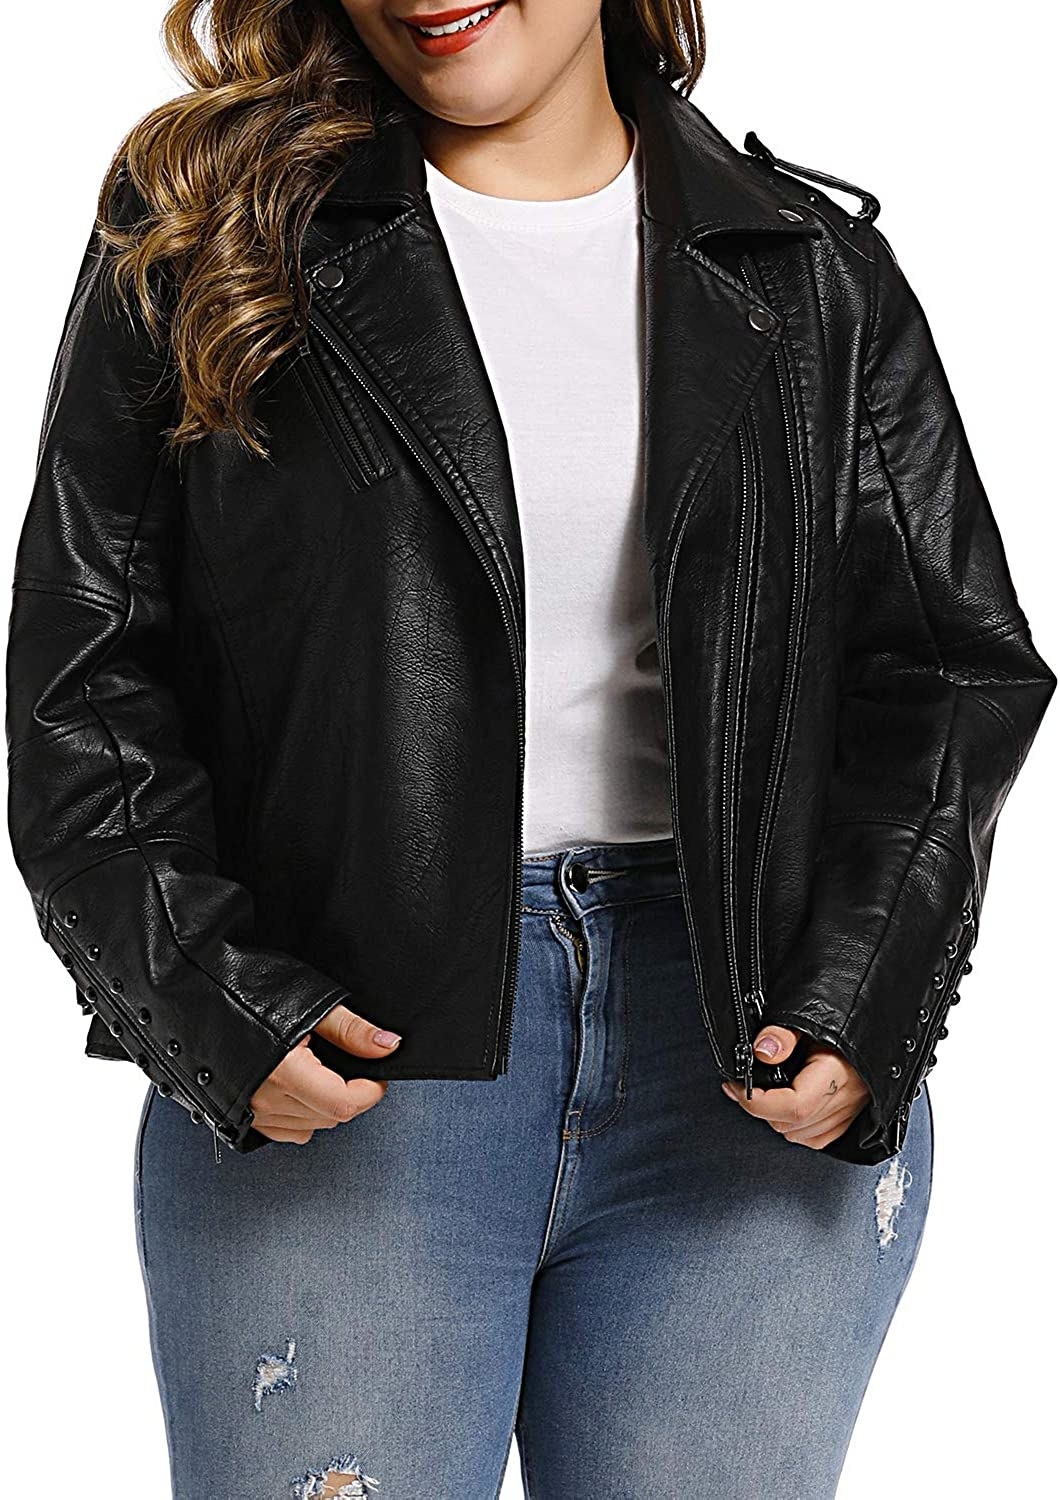 Model wearing the black faux leather jacket